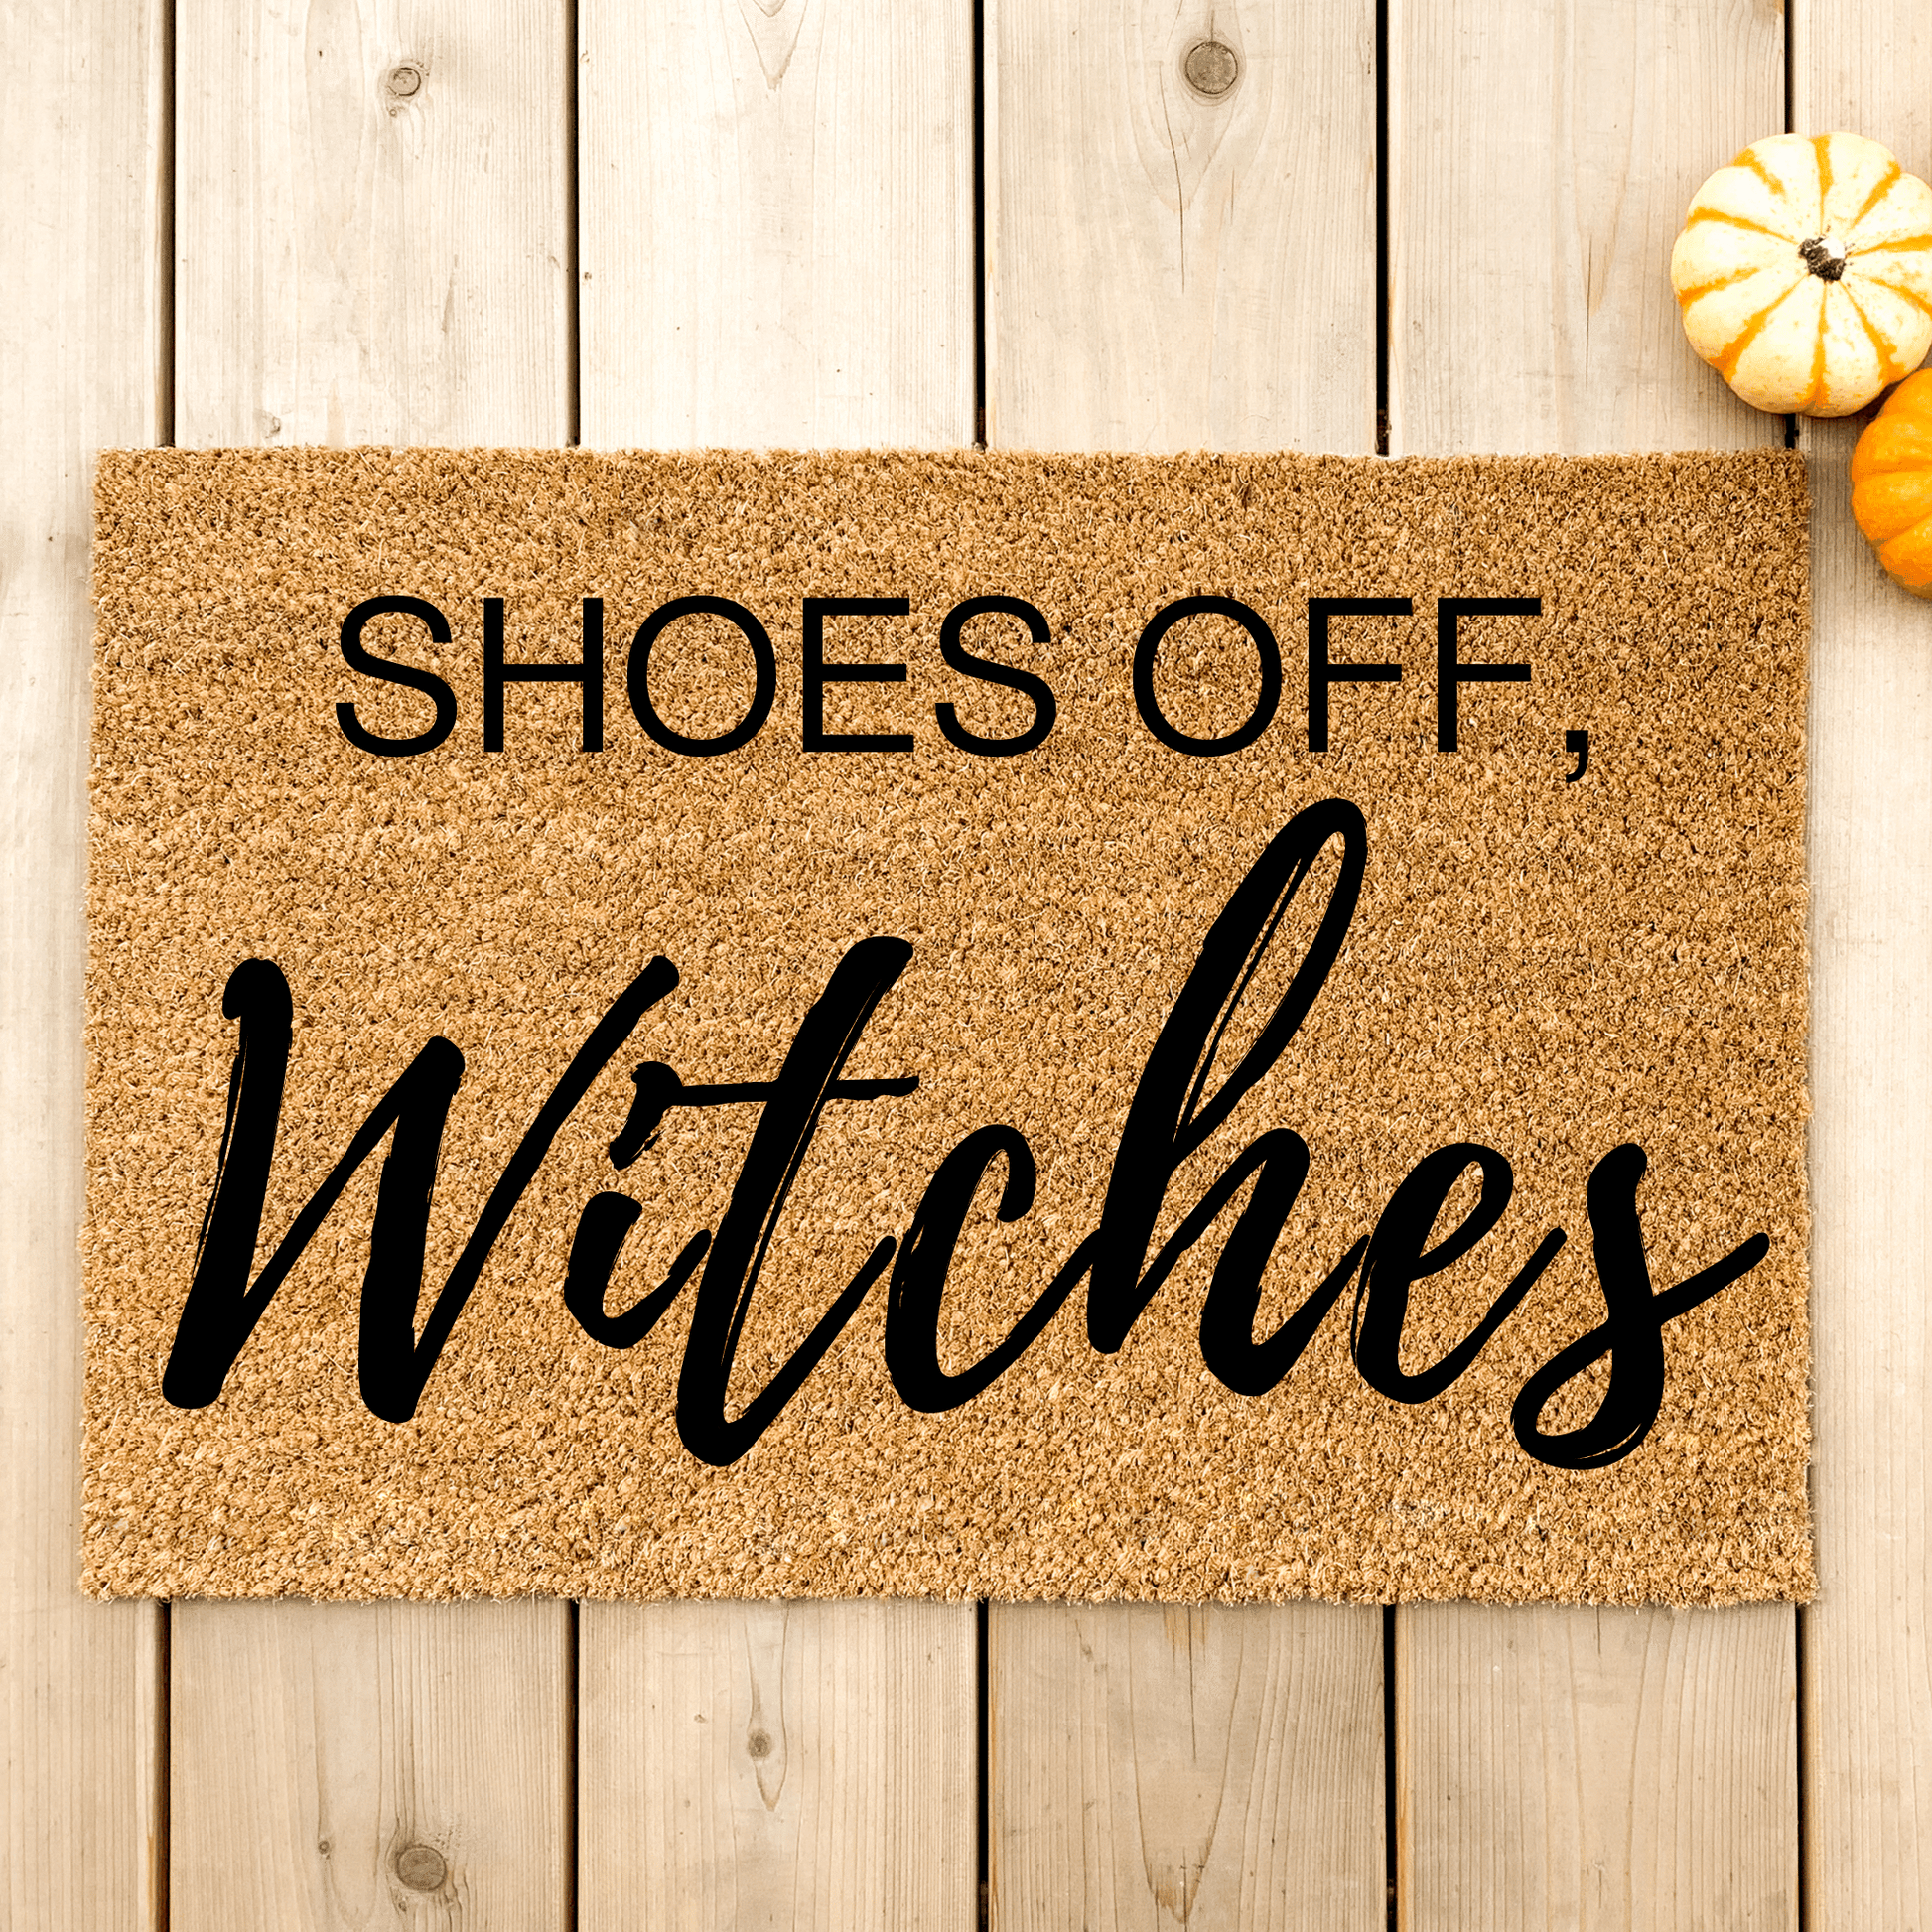 Shoes off Witches #2 doormat - Personalised Doormat Australia